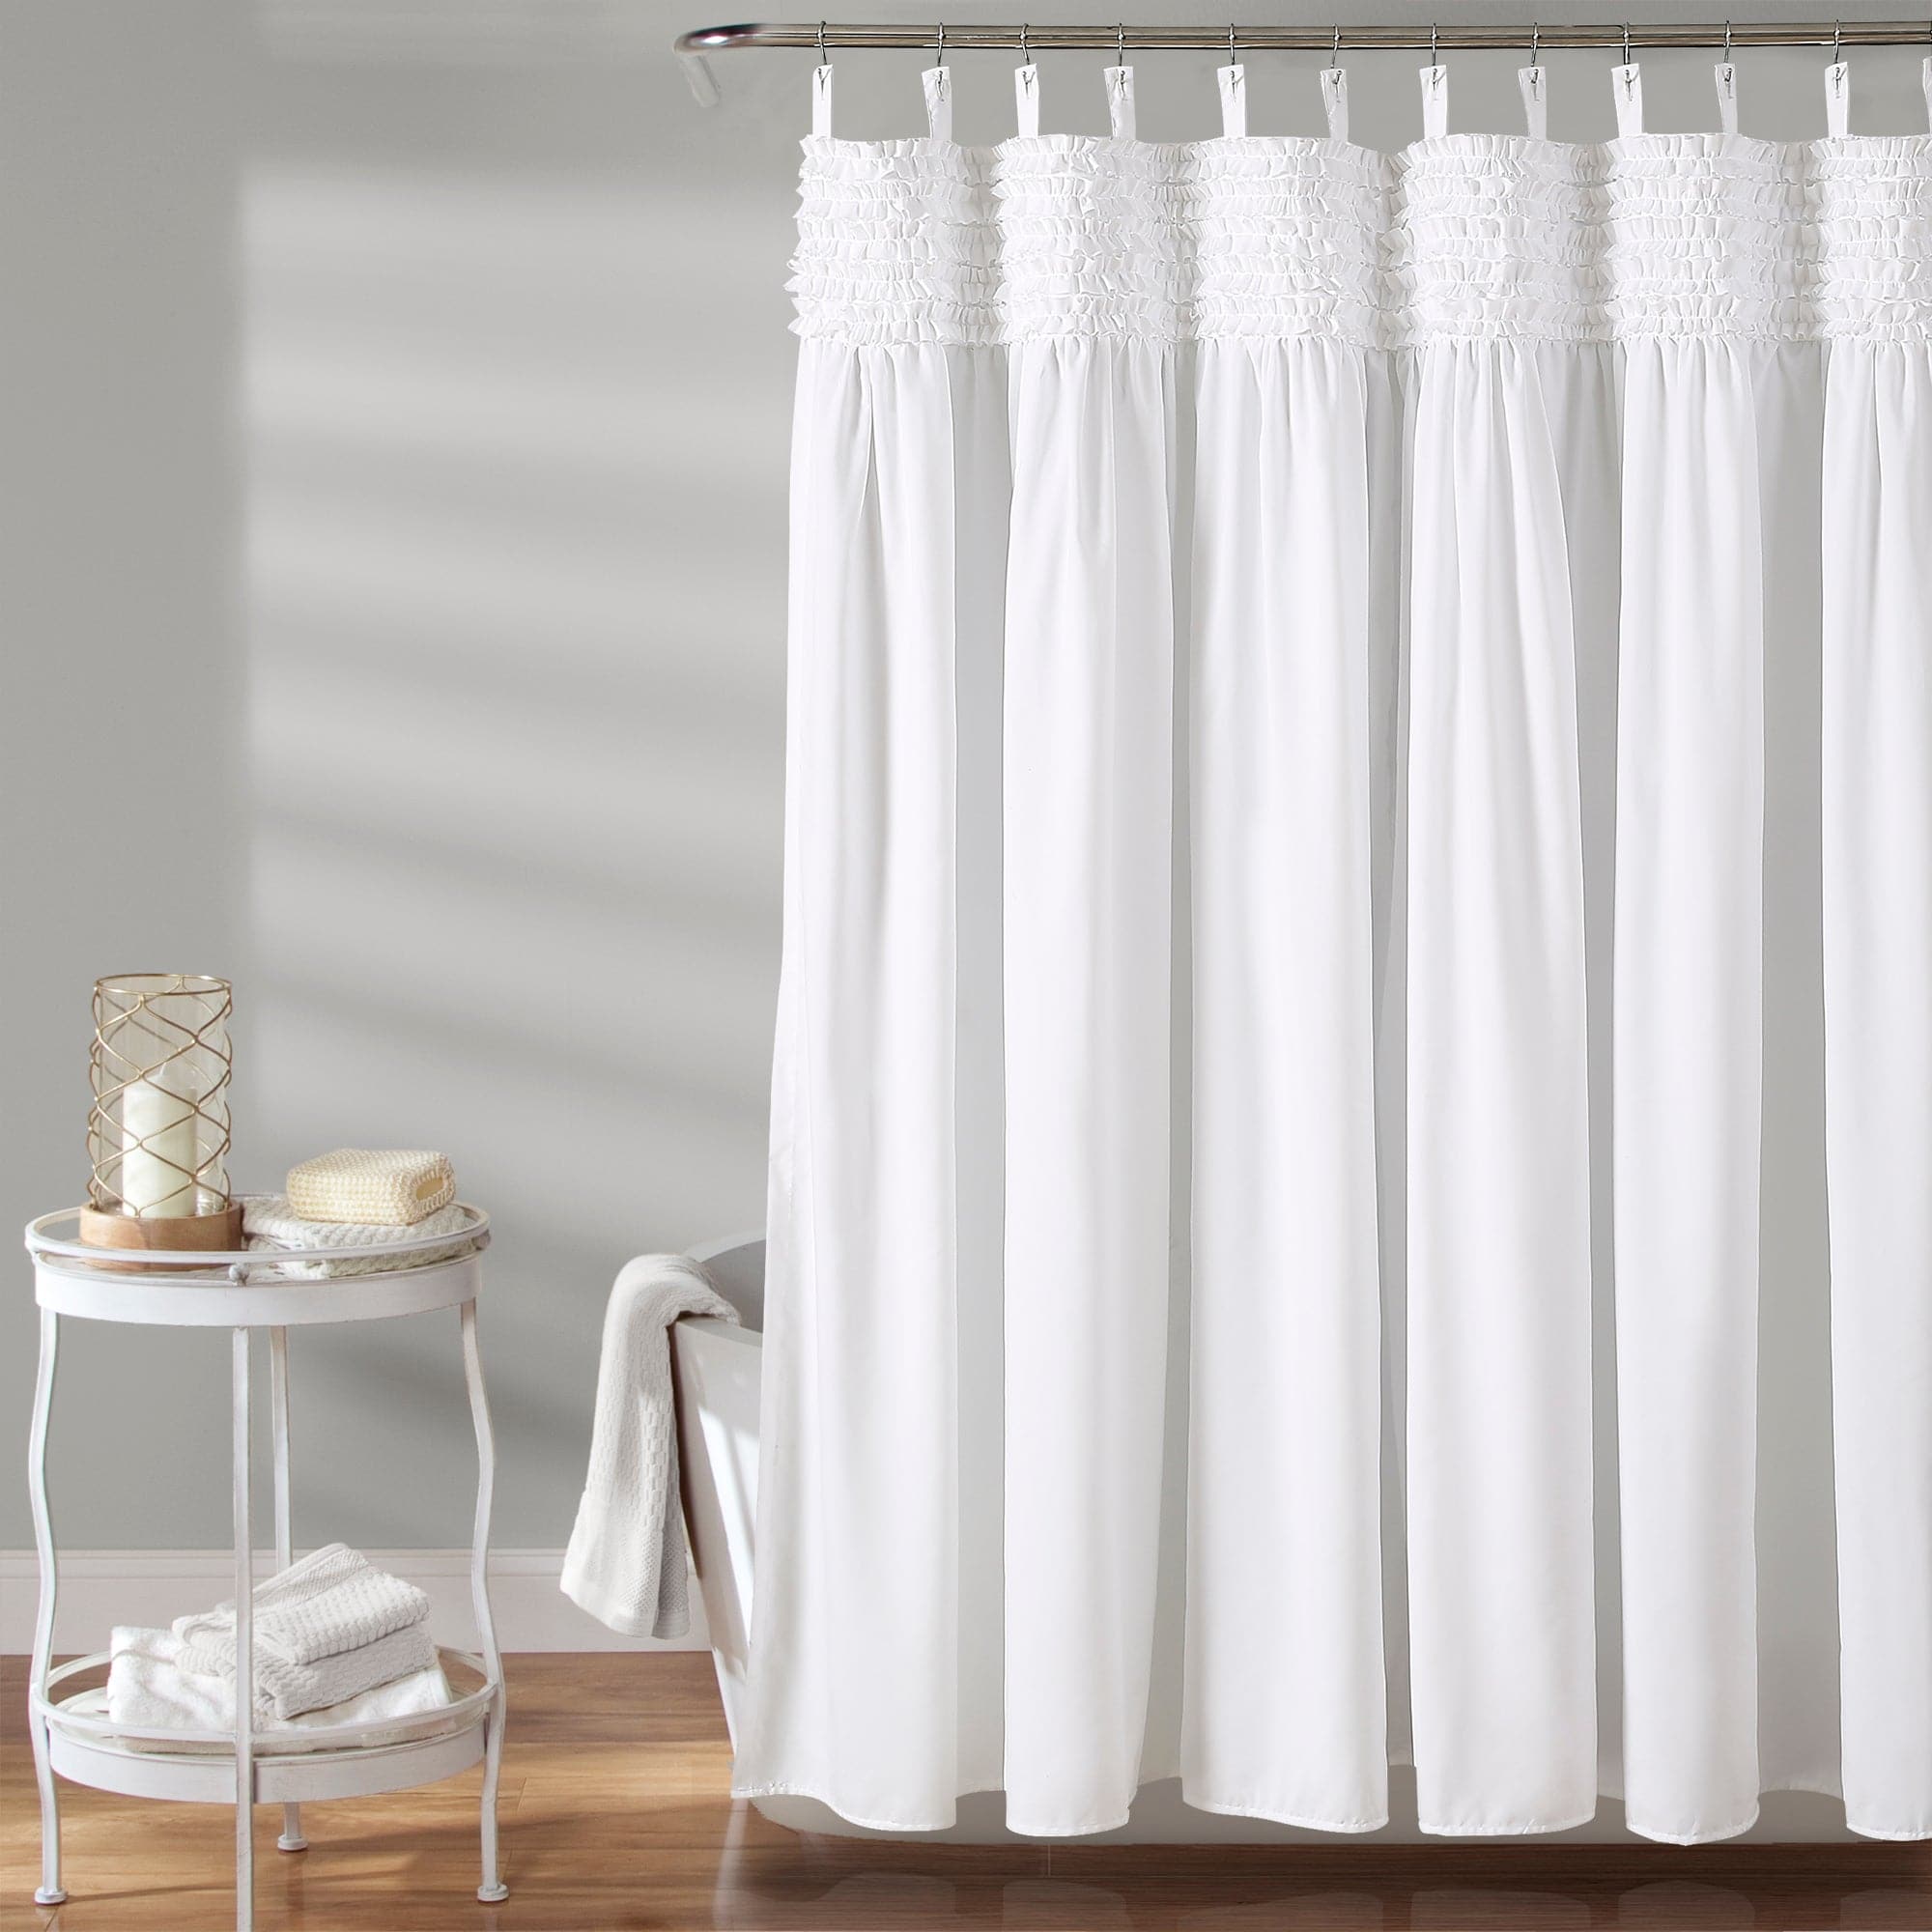 ruffle shower curtain - Small Living Room Ideas: 6 Ways To Maximise ...